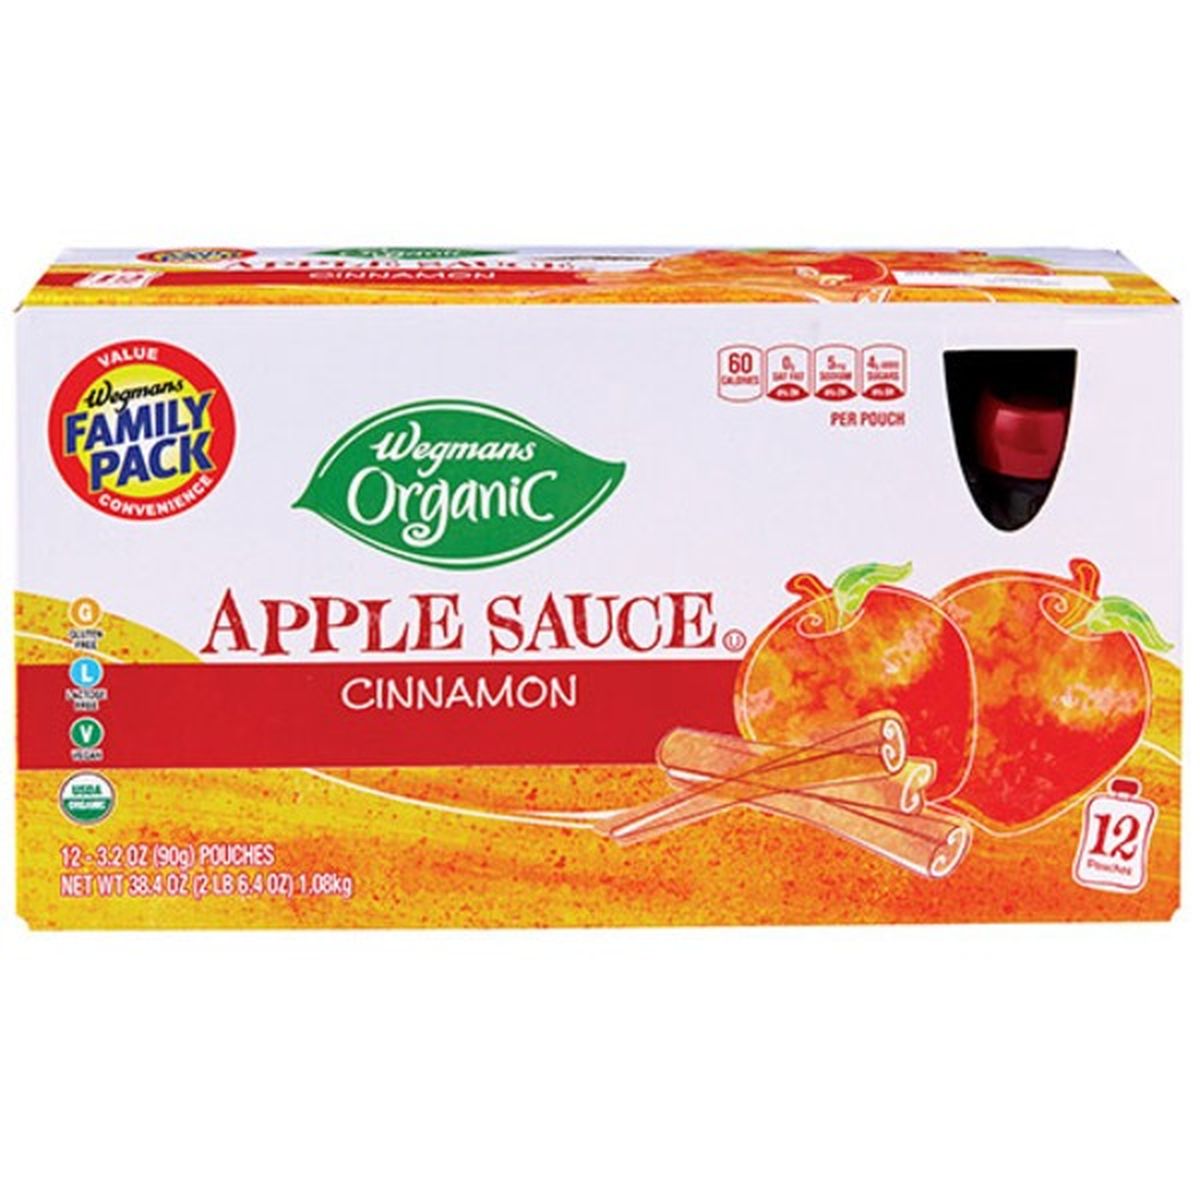 Calories in Wegmans Organic Cinnamon Apple Sauce FAMILY PACK